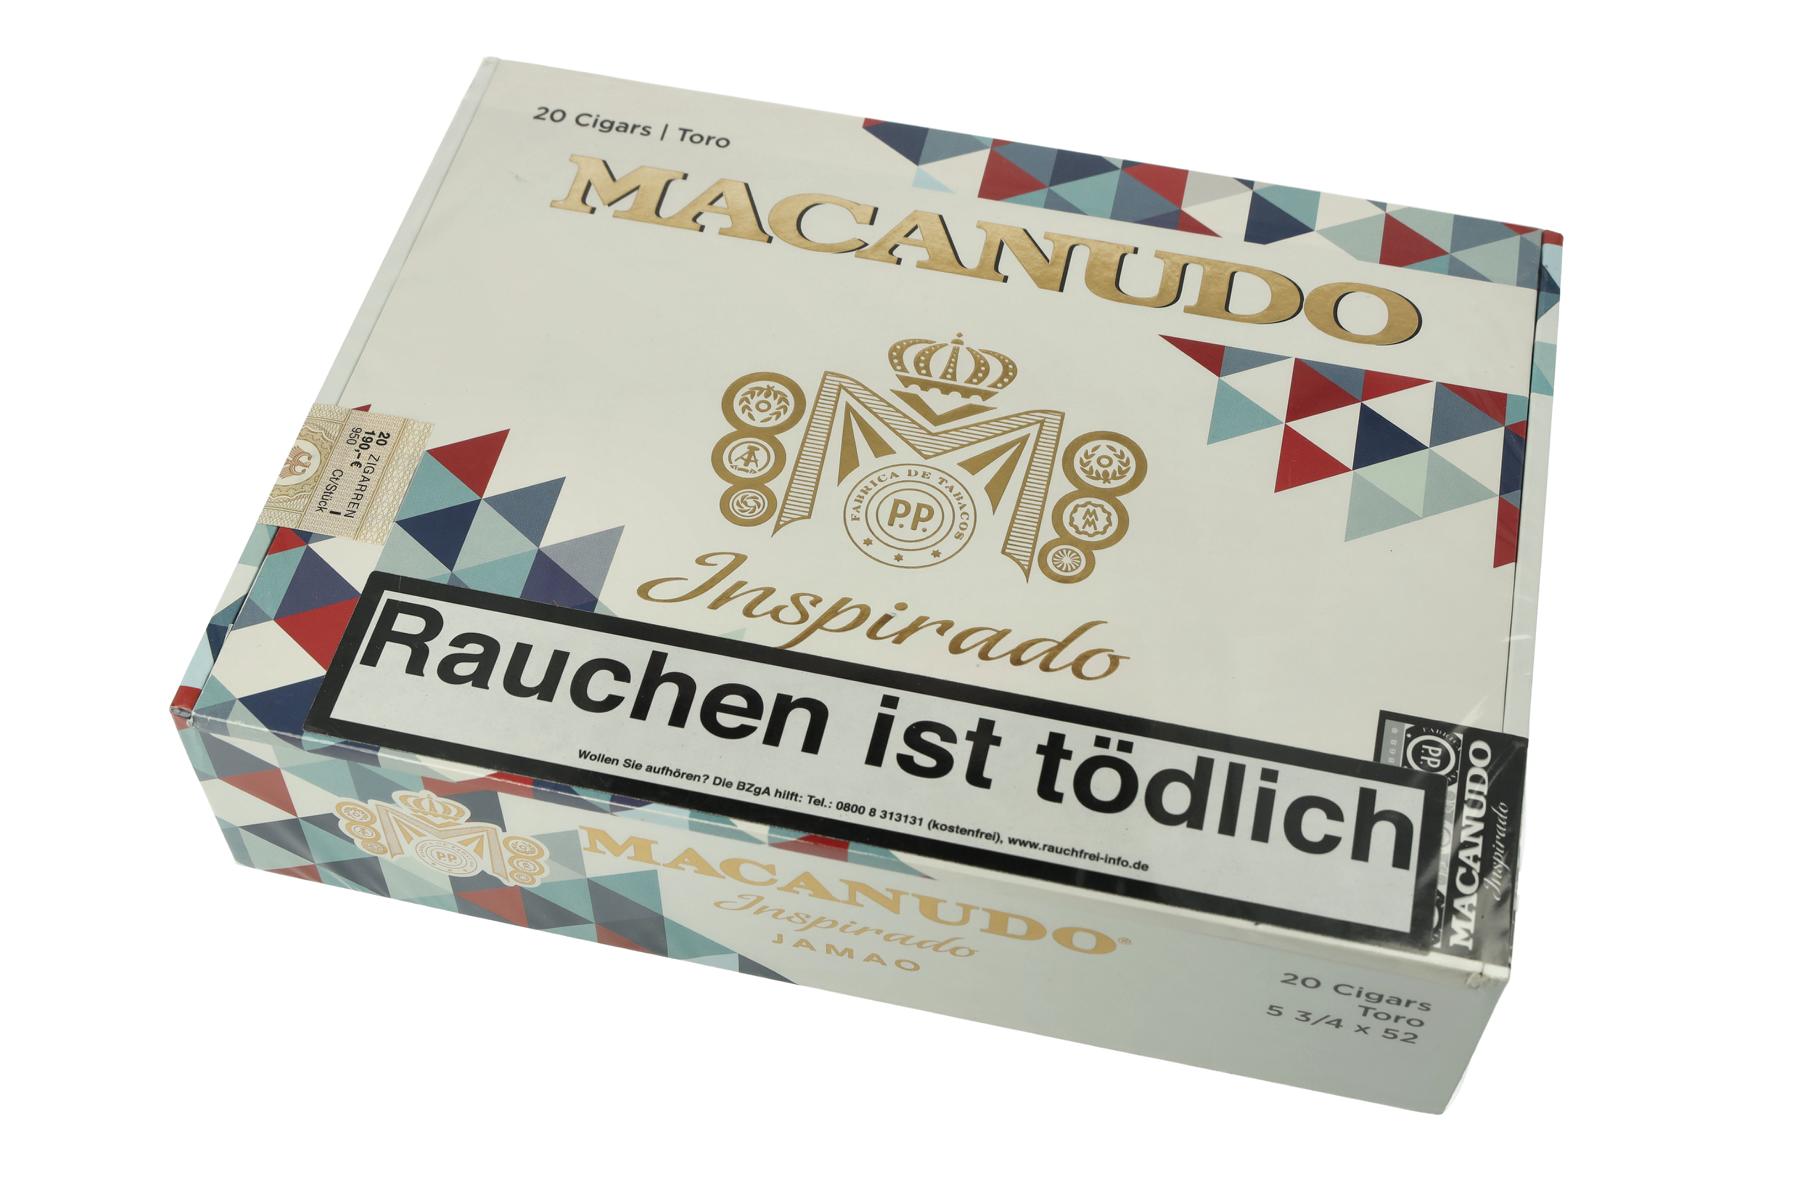 Macanudo Inspirado Jamao Toro Zigarren 20 Stk.